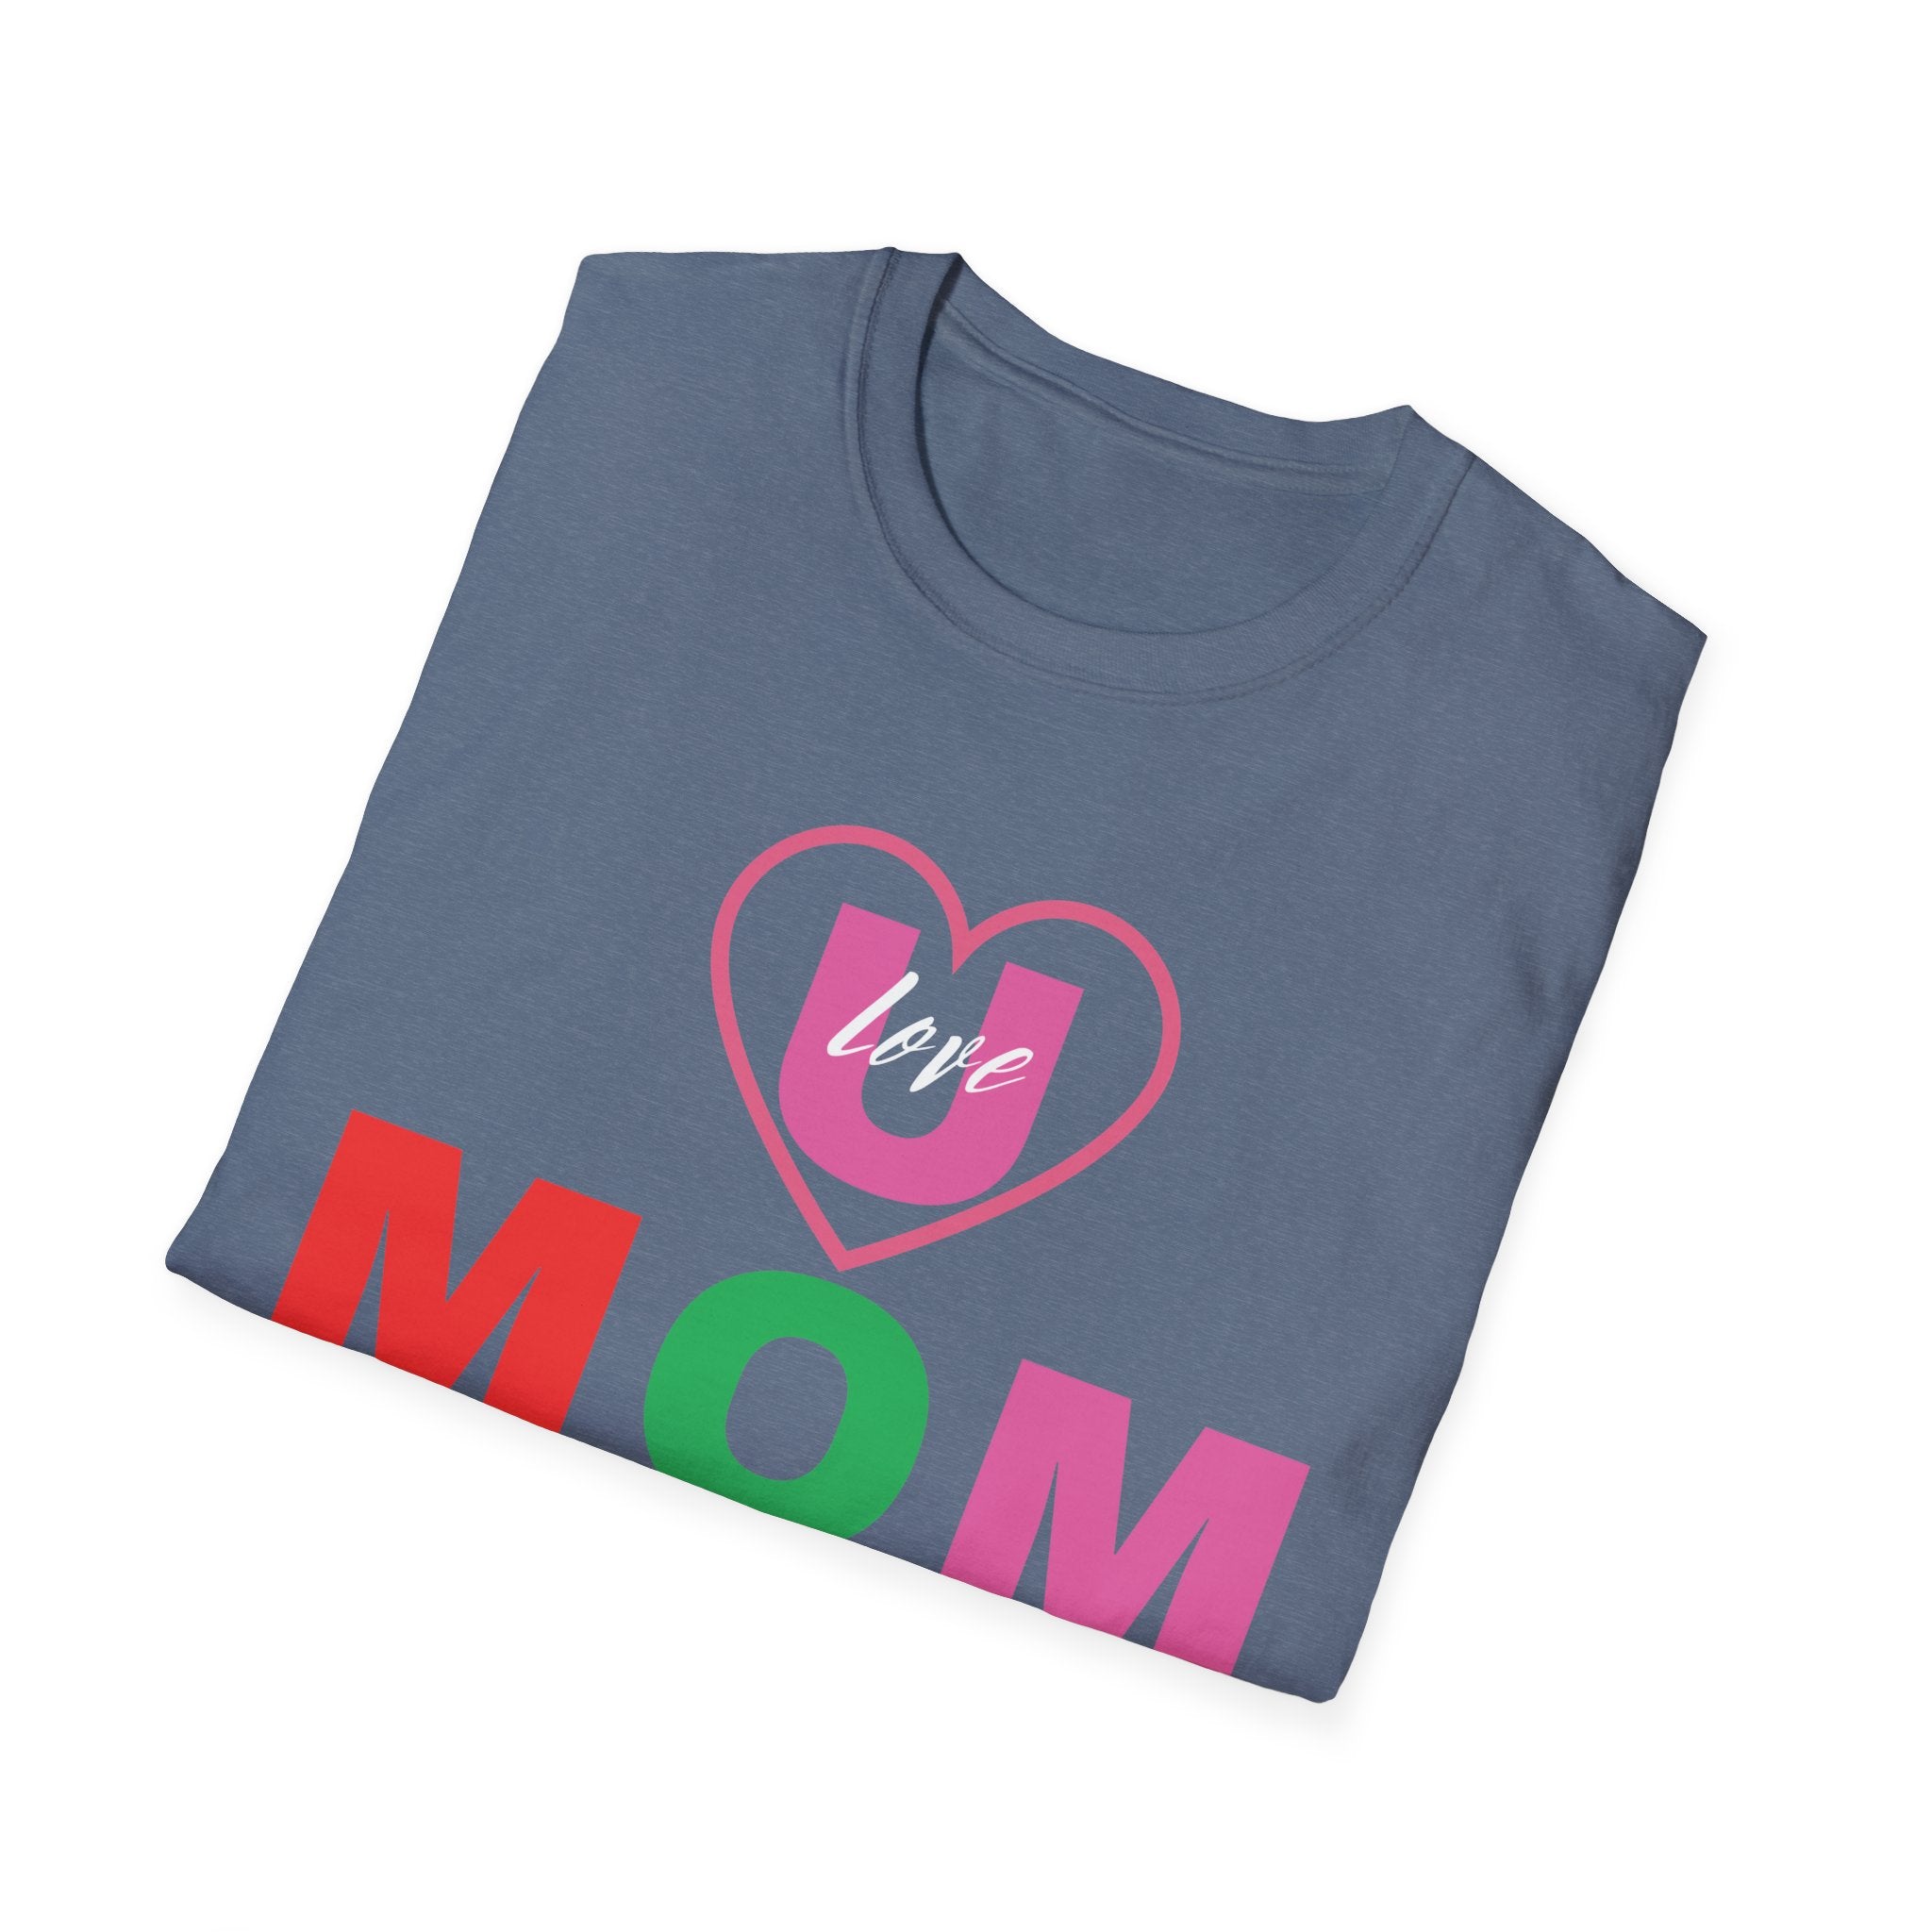 Love U Mom Unisex Softstyle T-Shirt, Crew Neck Shirt, Mother's Day Shirt, Happy Mother's Day T-shirt, Best Mom Shirt